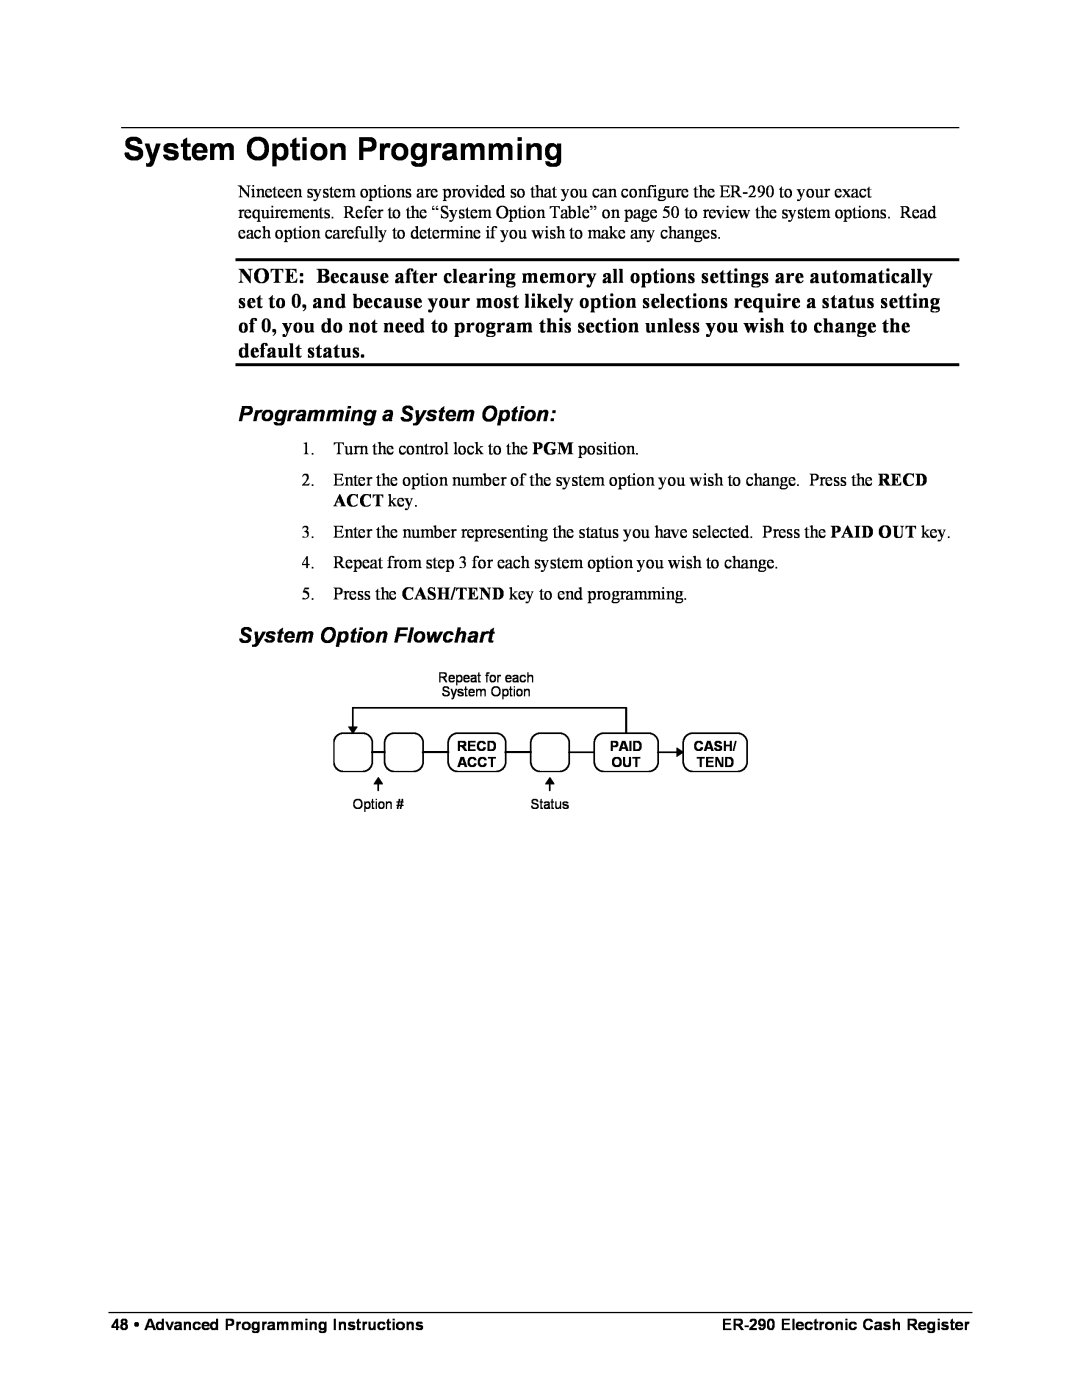 Samsung M-ER290 specifications System Option Programming, Programming a System Option, System Option Flowchart 